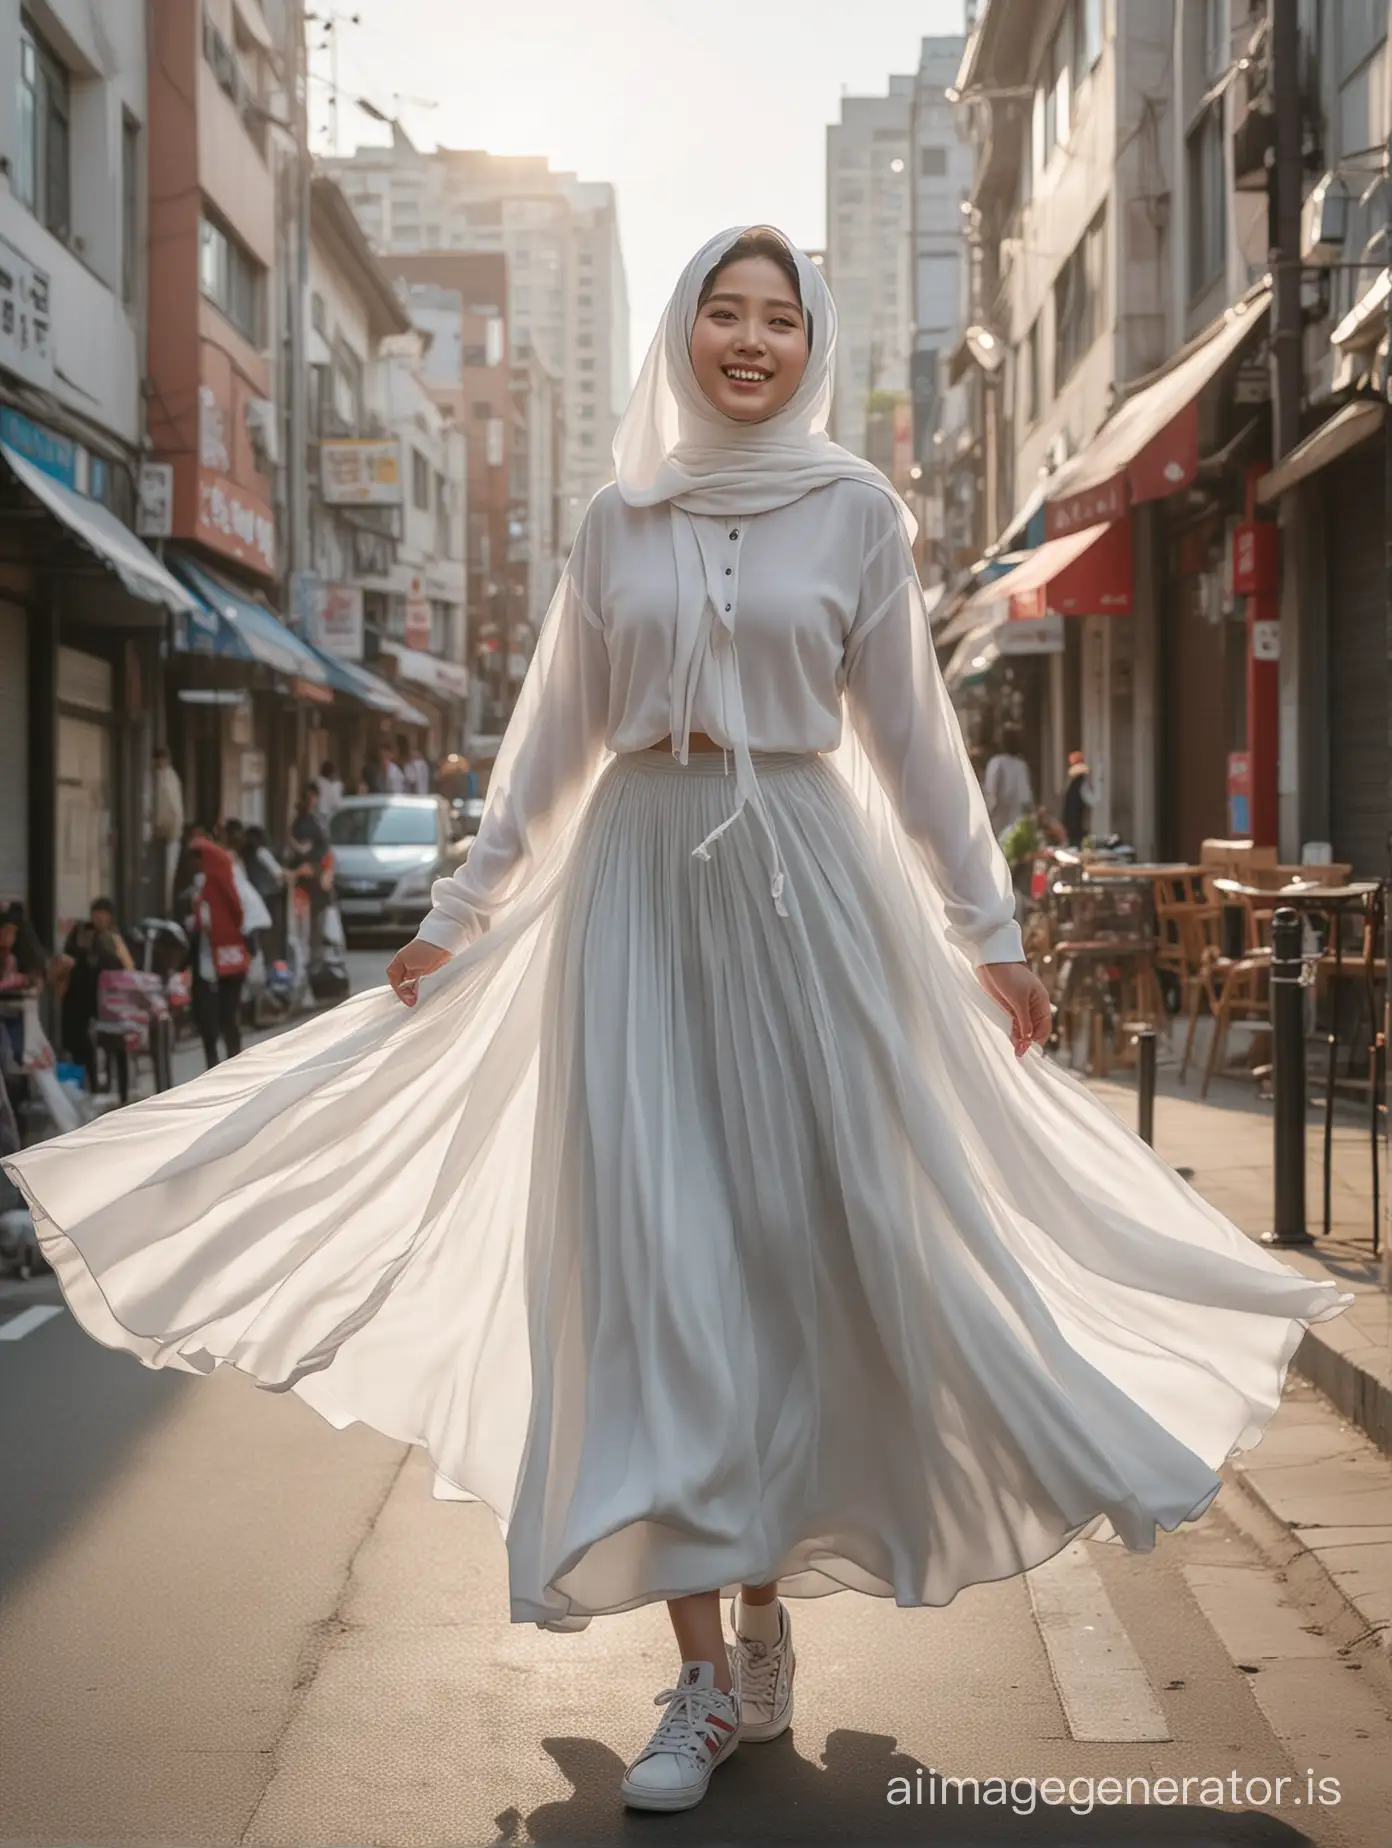 Stylish-Korean-Girl-Walking-in-Flowing-Skirt-and-Hijab-on-Urban-Street